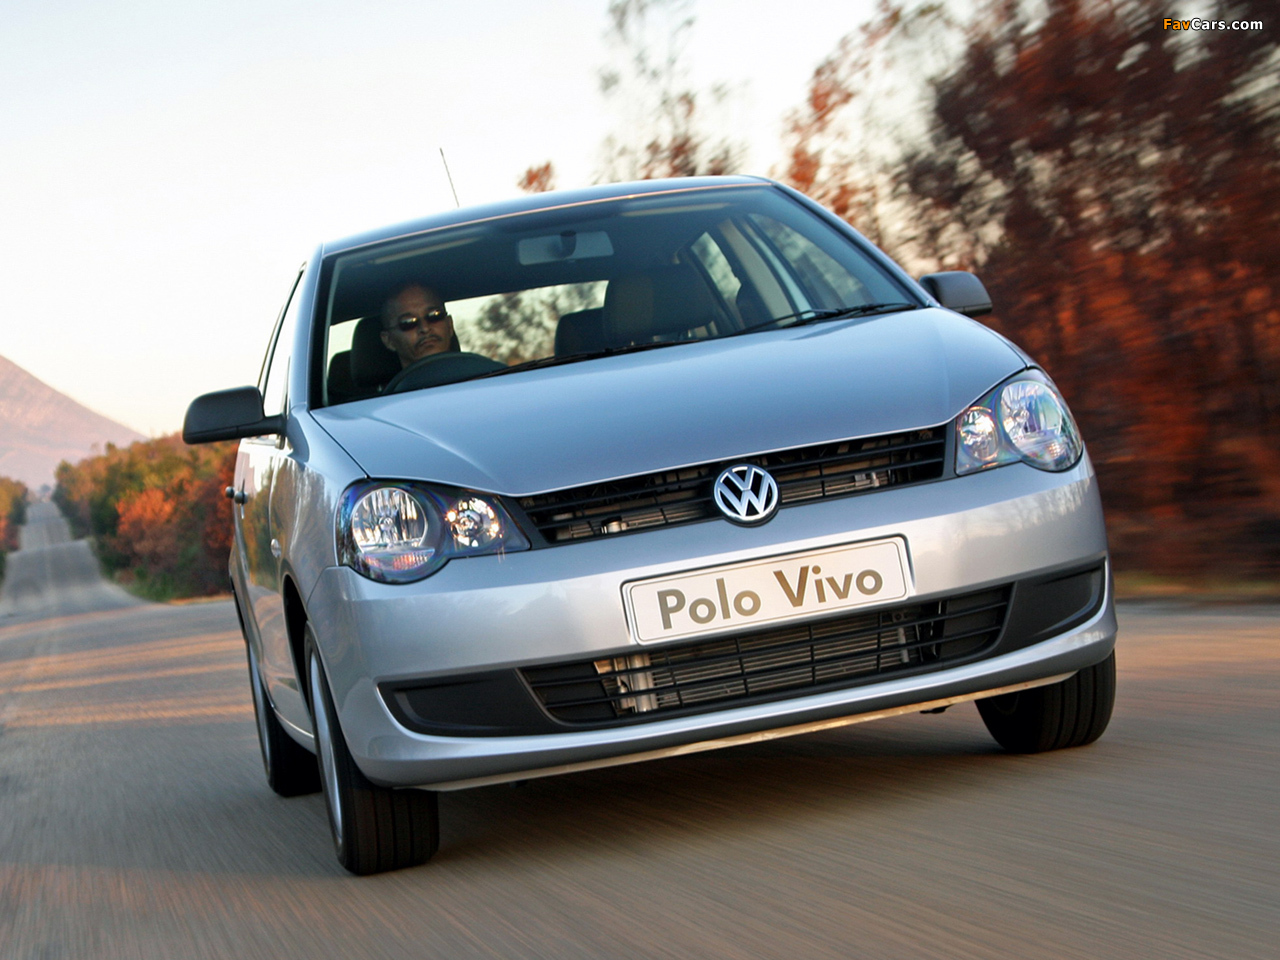 Volkswagen Polo Vivo Hatchback (IVf) 2010 photos (1280 x 960)